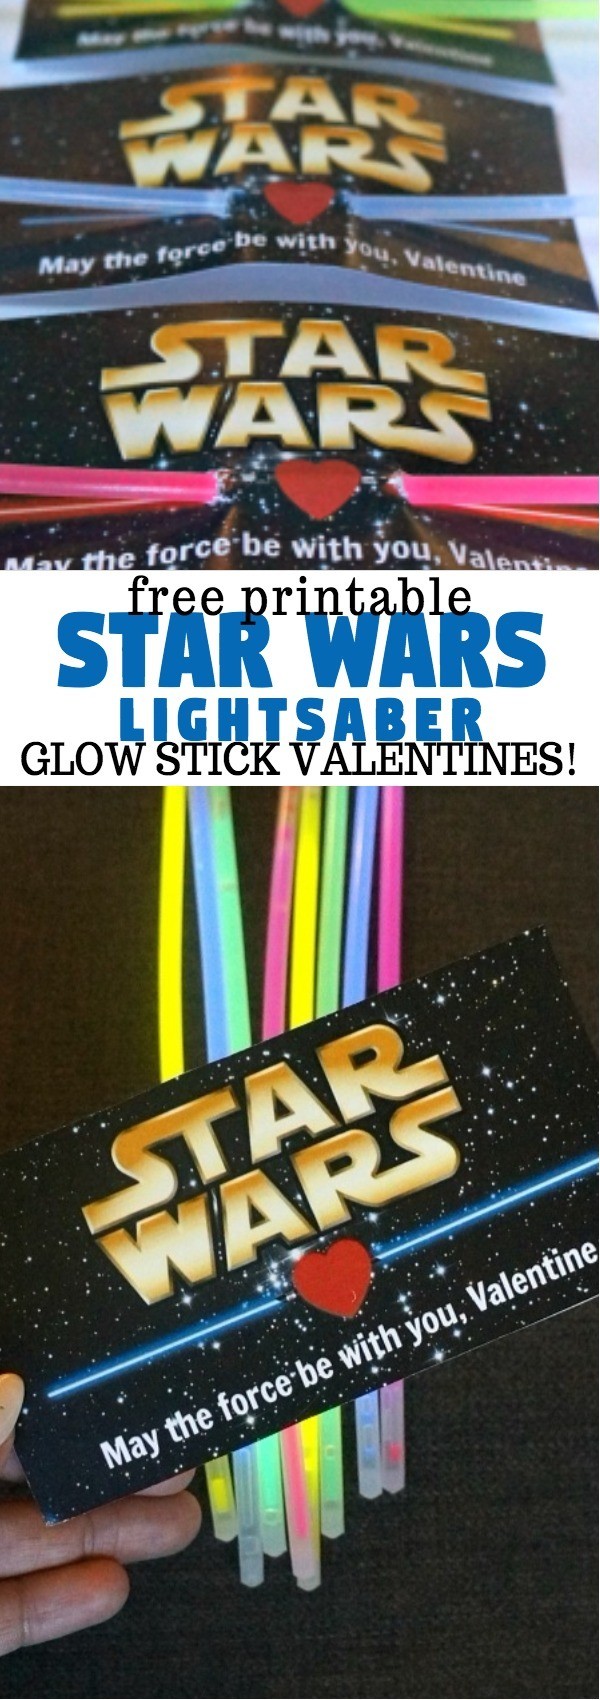 star-wars-printable-valentines-lightsaber-glow-stick-valentines-cards